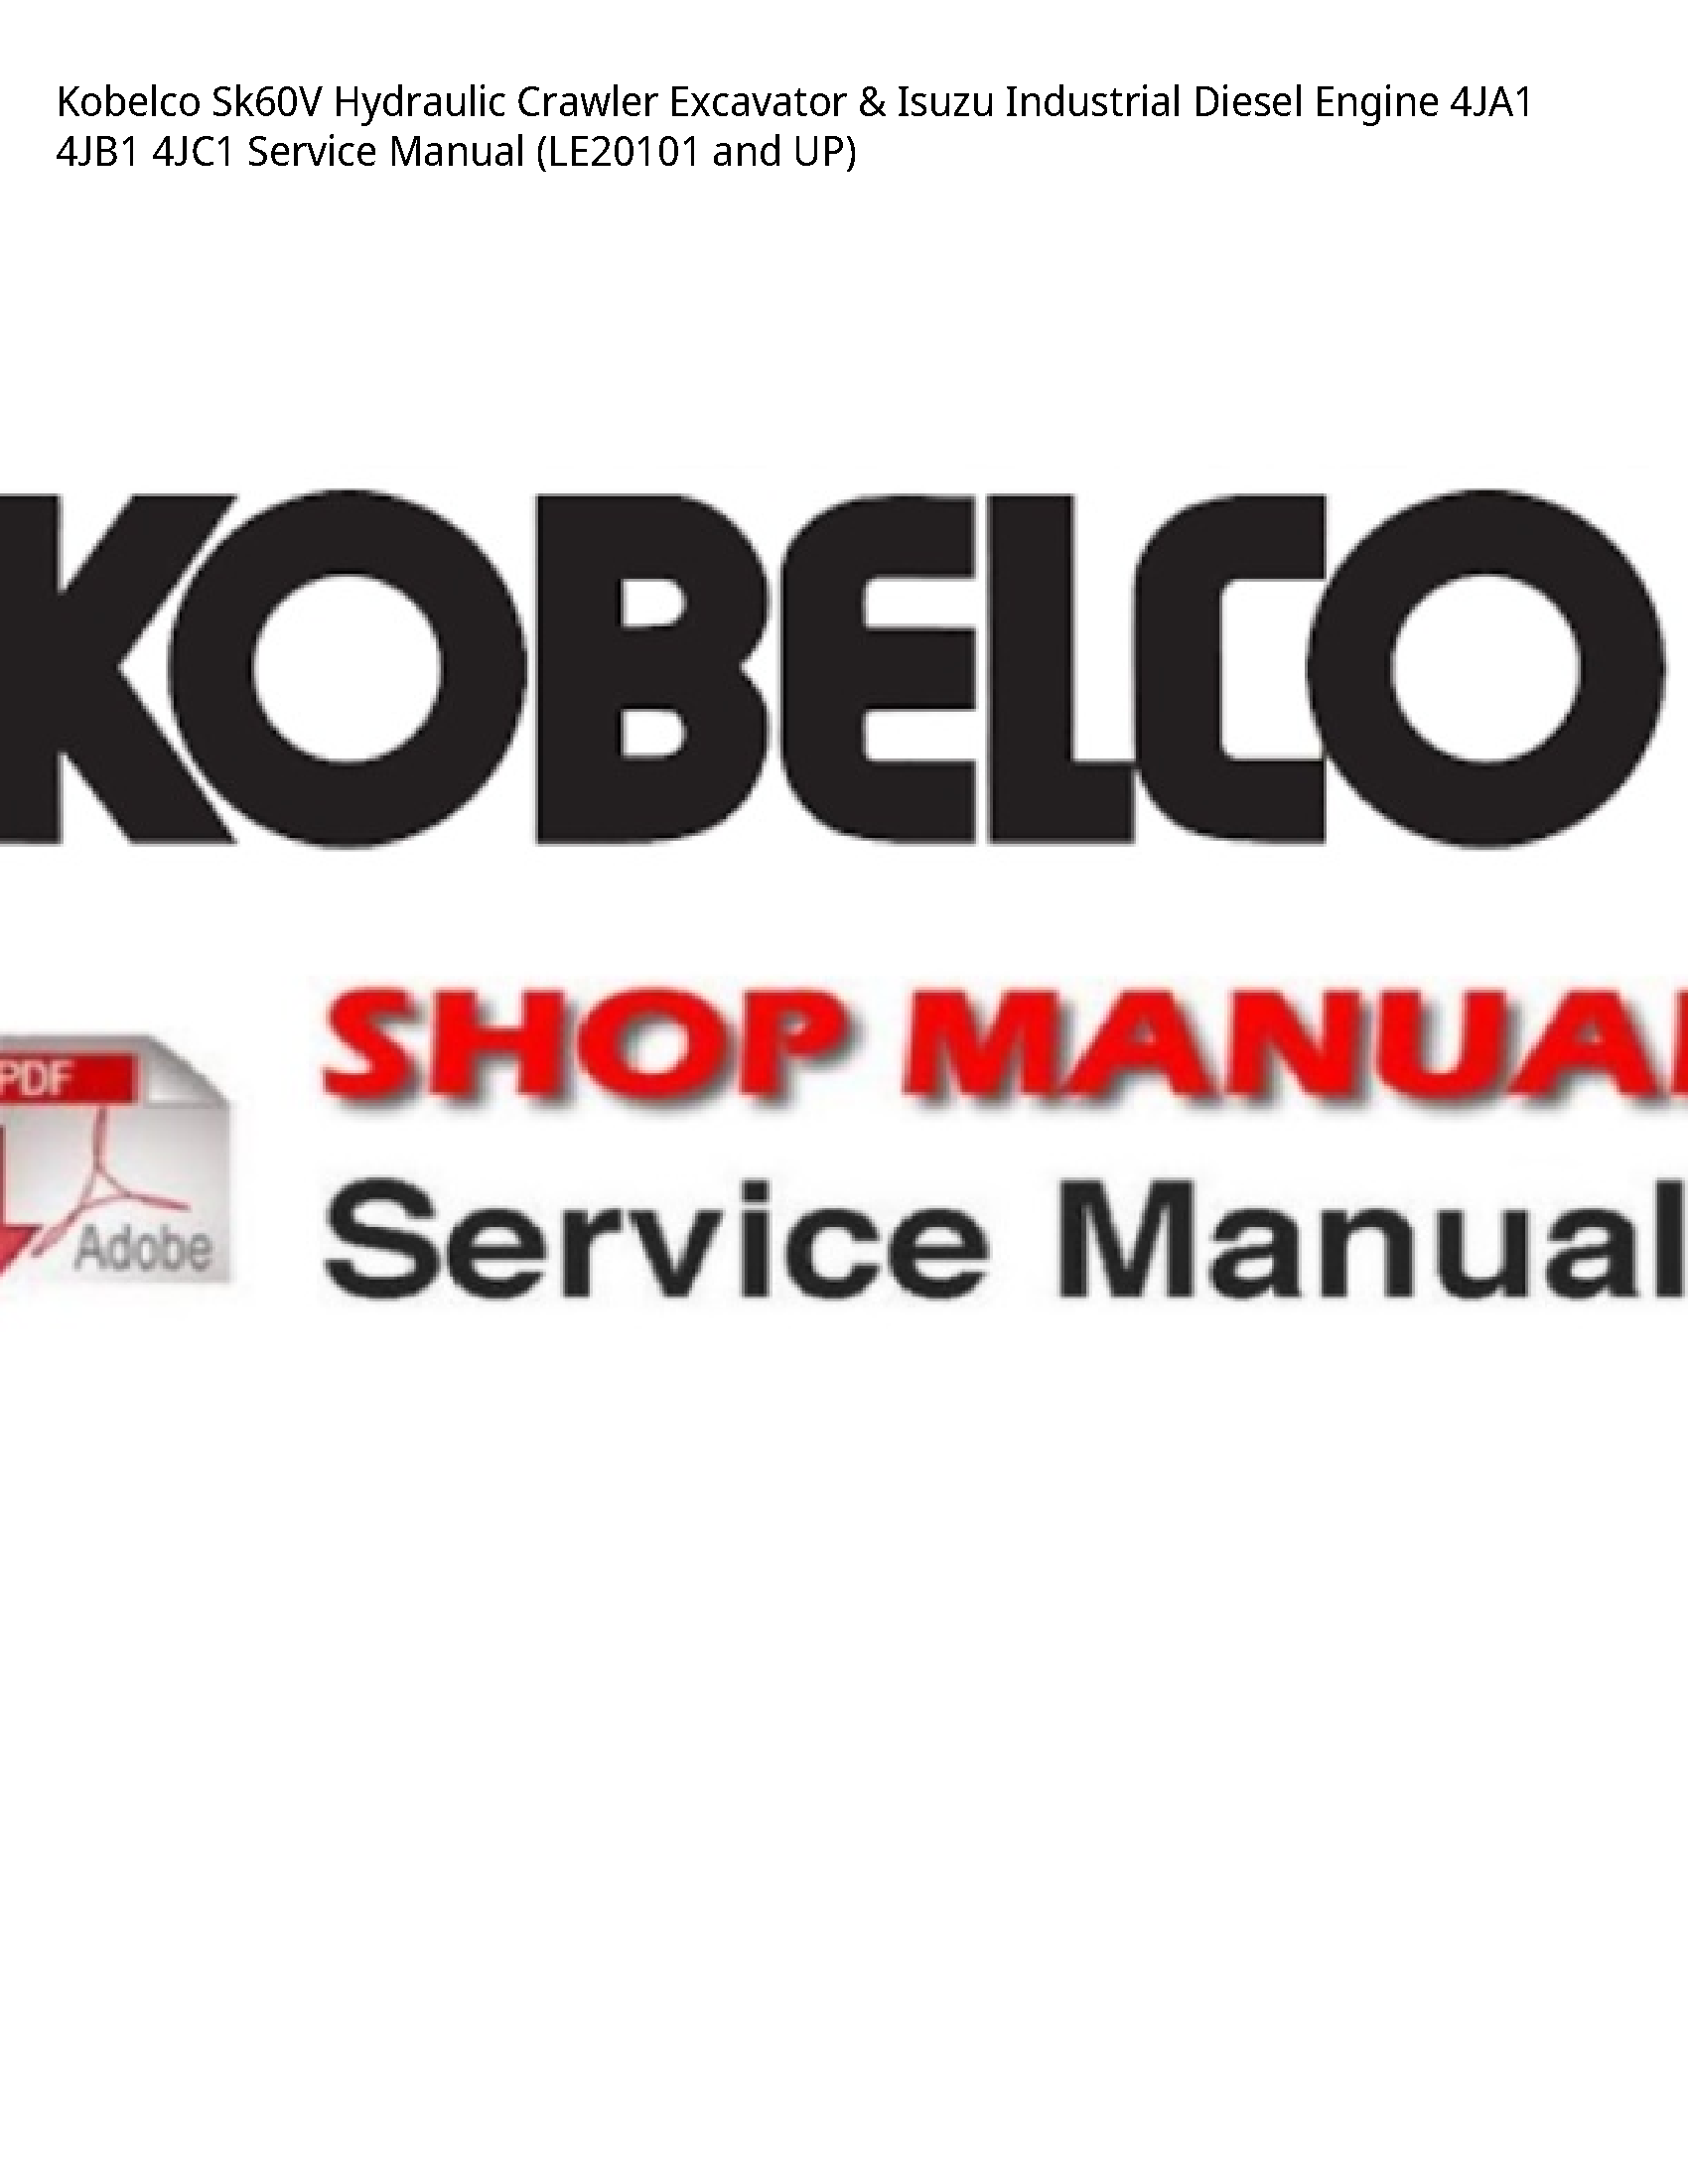 Kobelco Sk60V Hydraulic Crawler Excavator Isuzu Industrial Diesel Engine Service manual